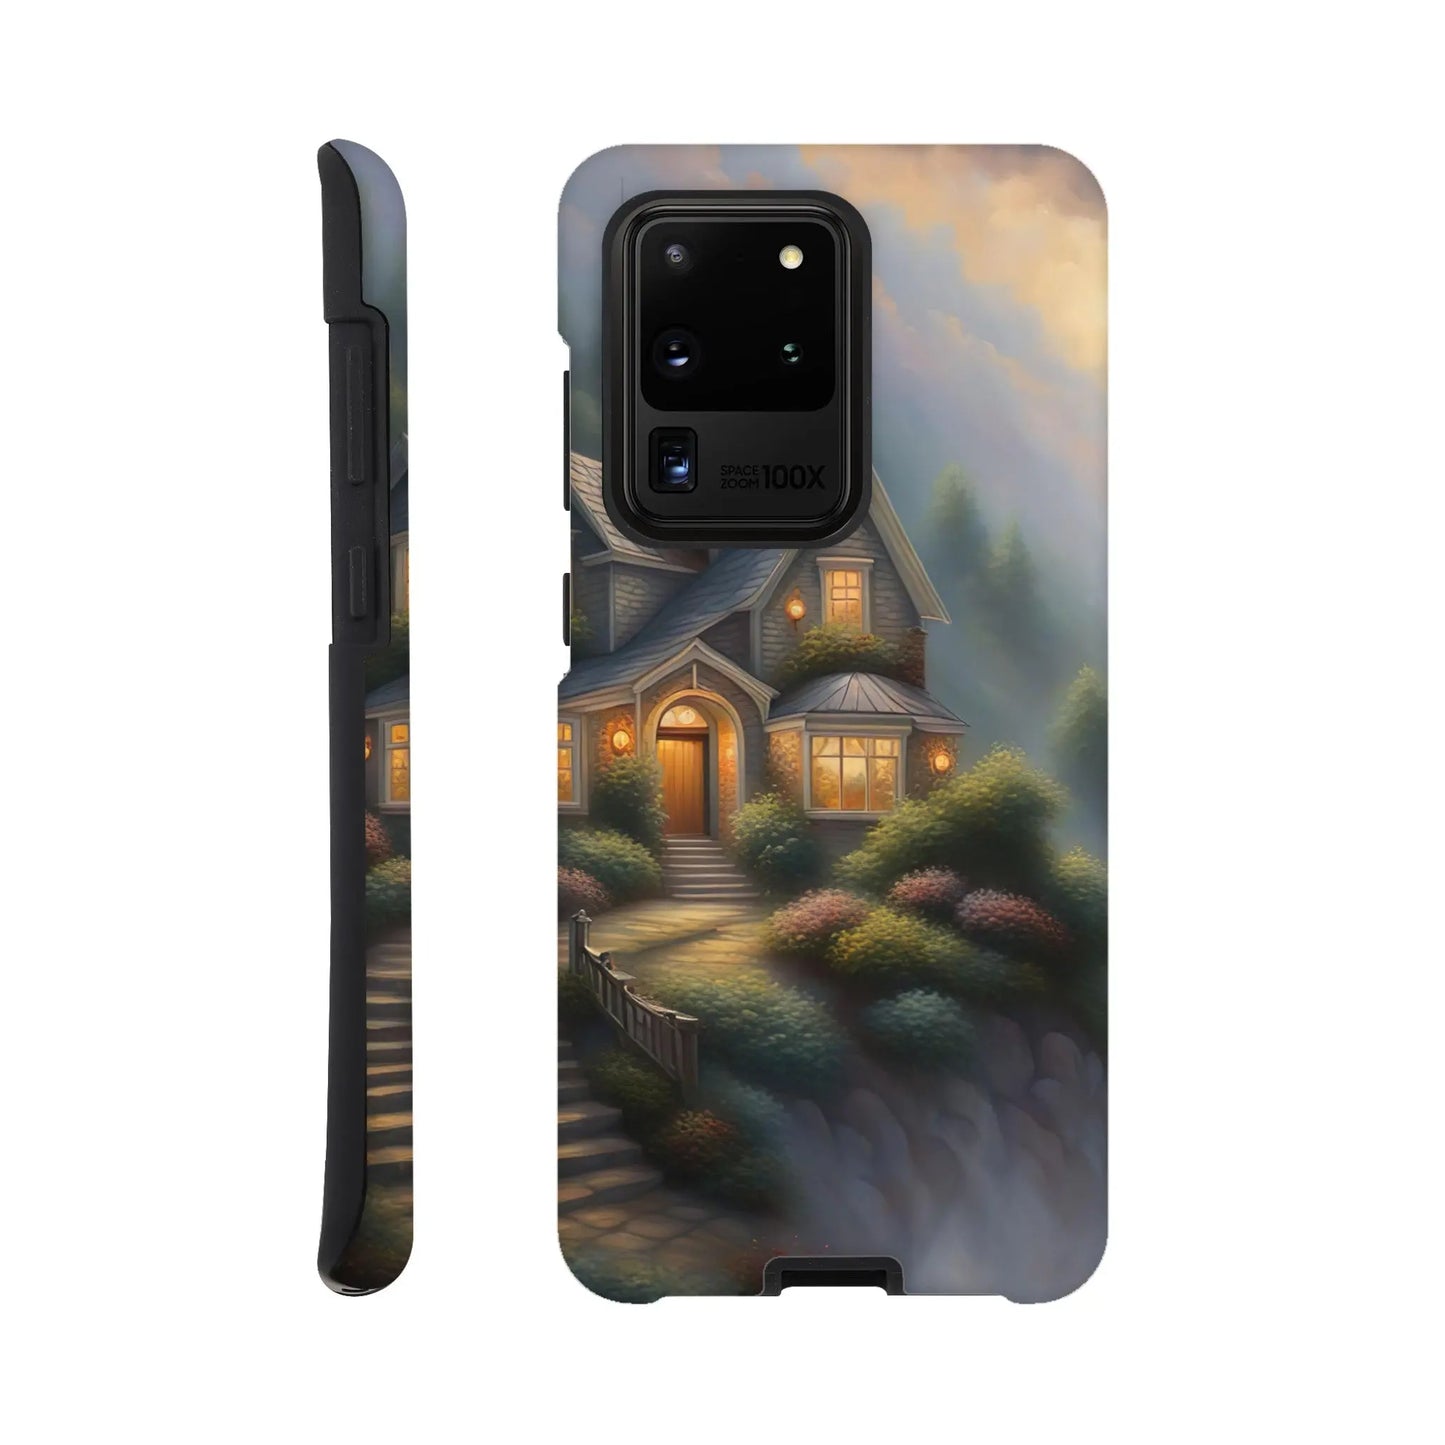 Smartphone-Hülle "Hart" - Traumlandschaft - Digitaler Stil, KI-Kunst RolConArt, Surreale Landschaften, Galaxy-S20-Ultra